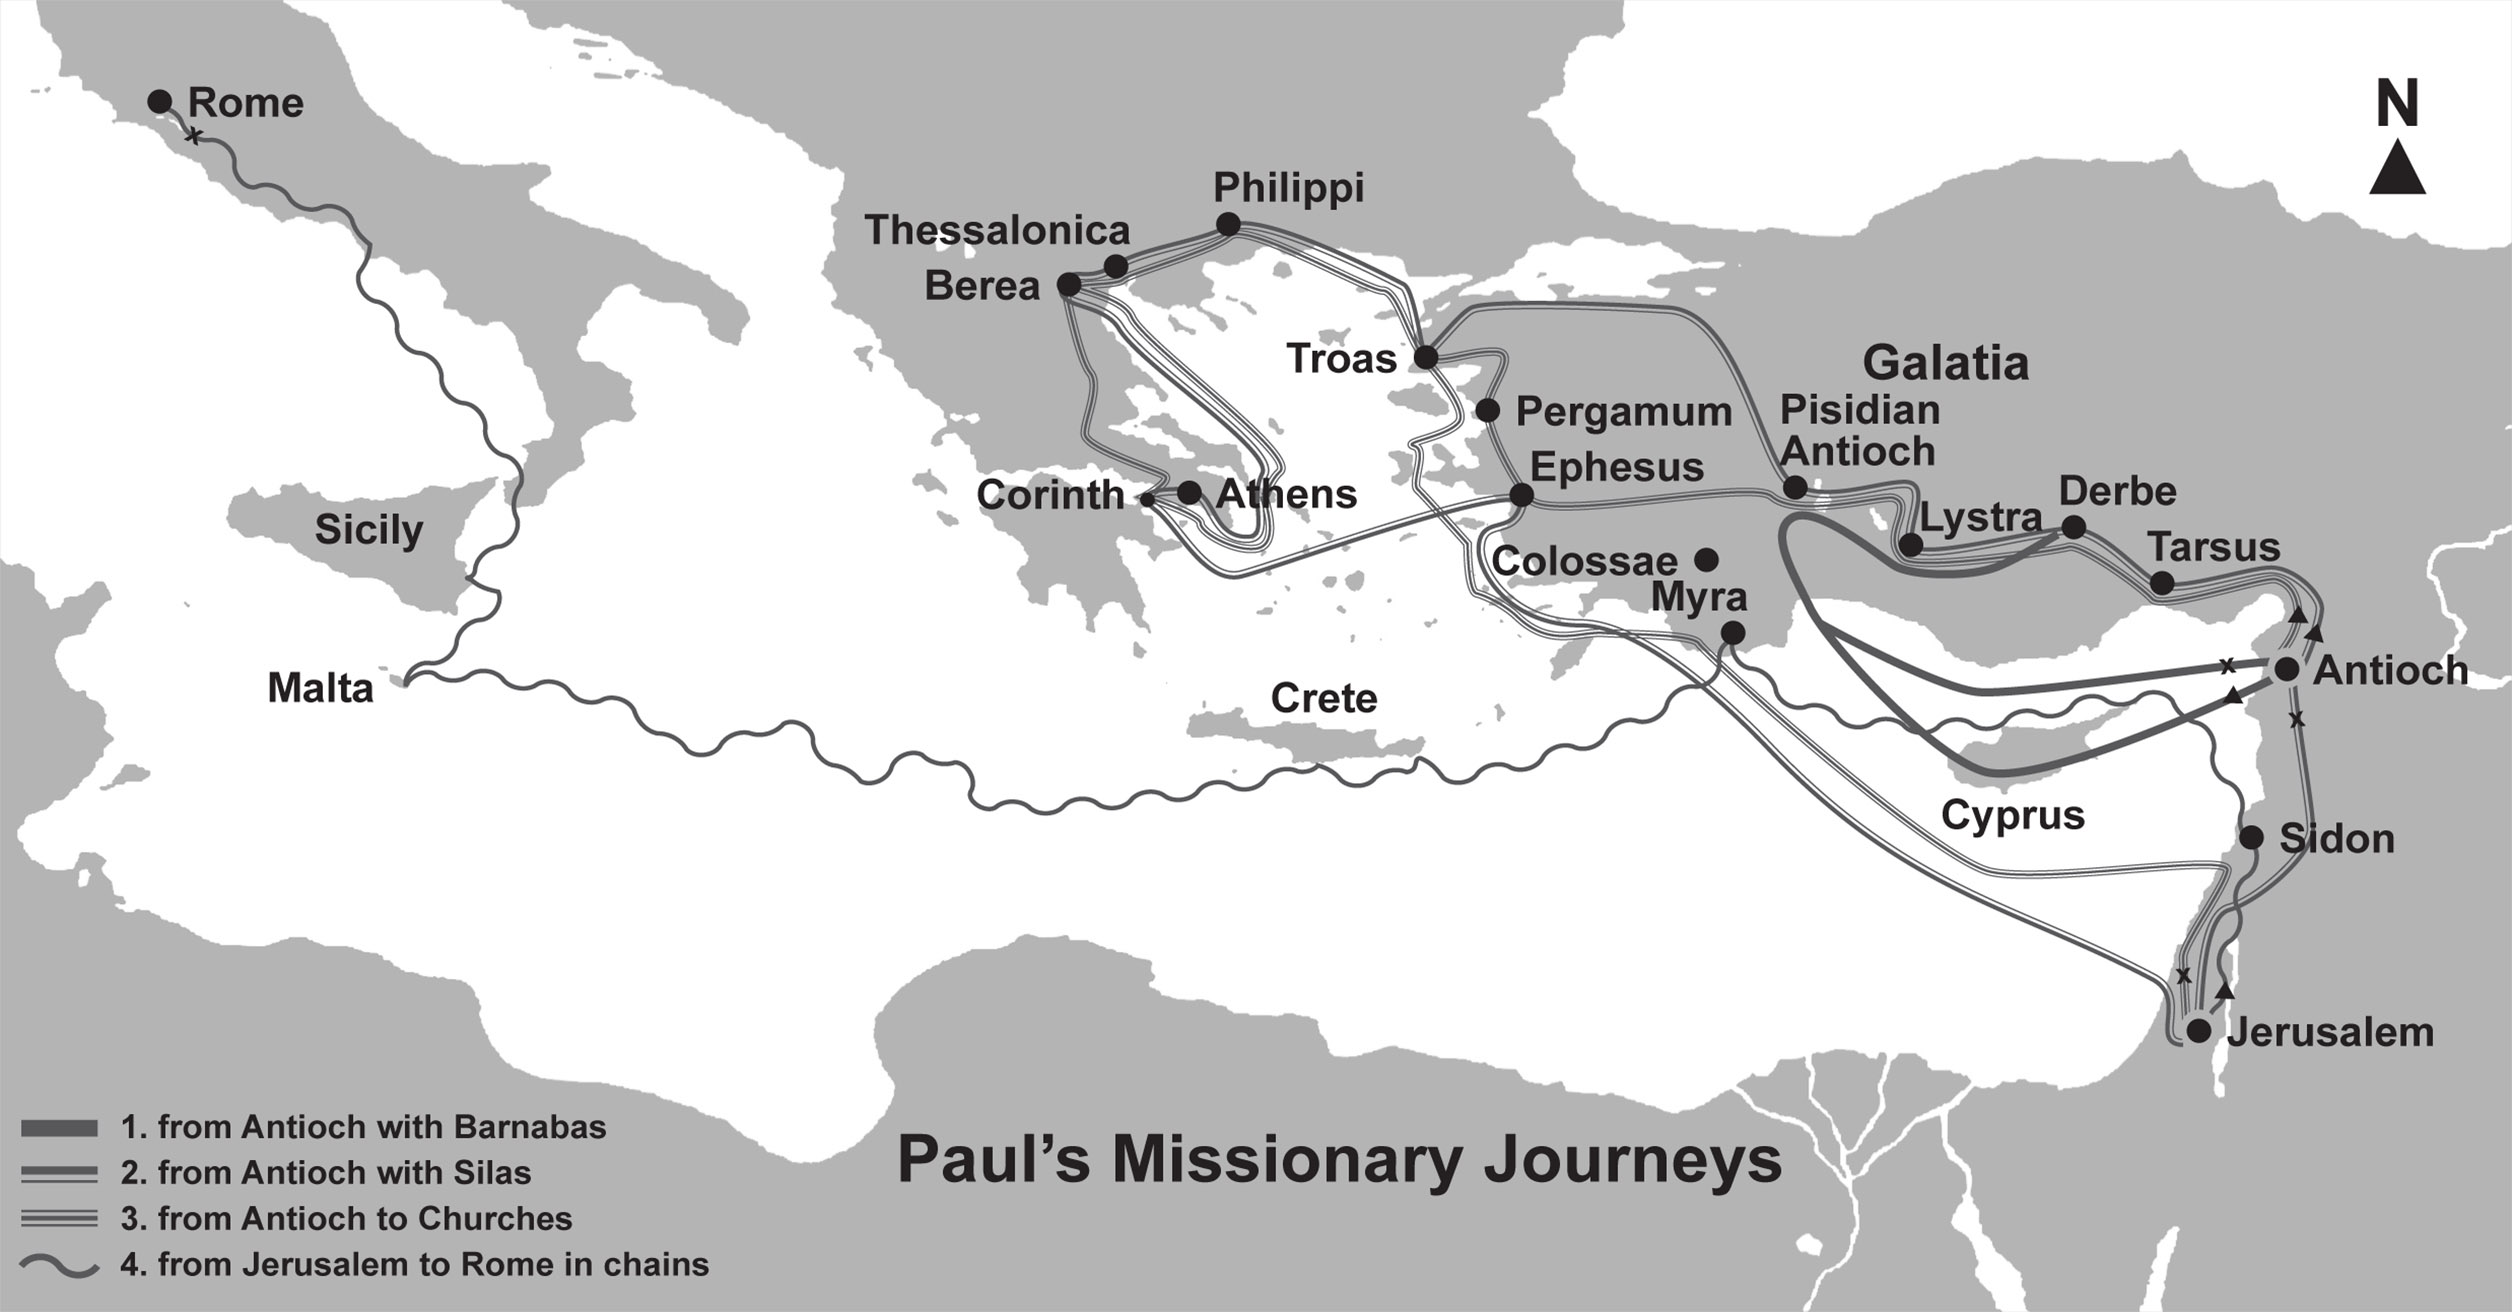 Paul's Missionary Journeys